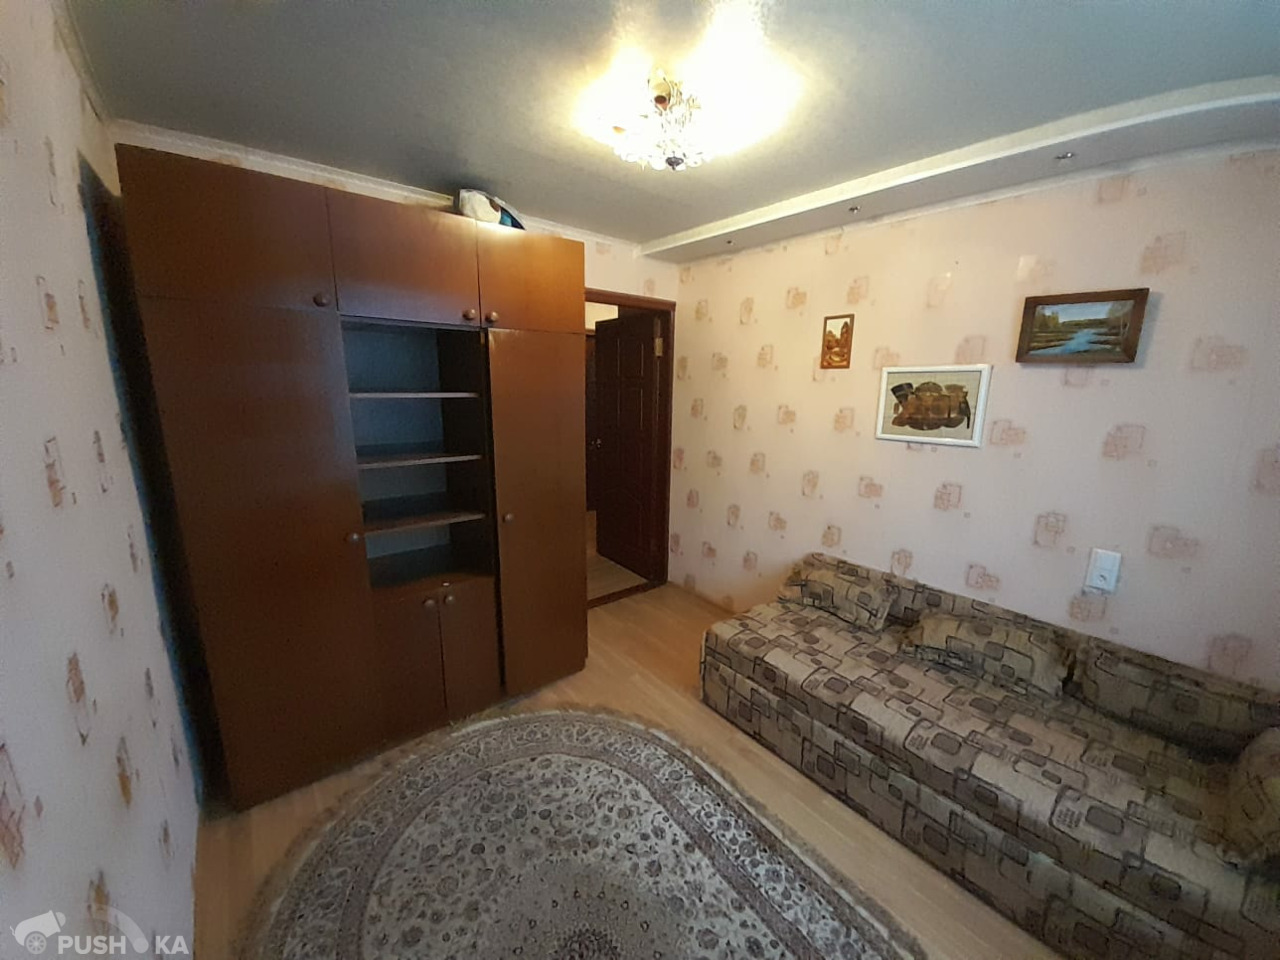 Продаётся 3-комнатная квартира 57.0 кв.м. этаж 3/5 за 4 350 000 руб 